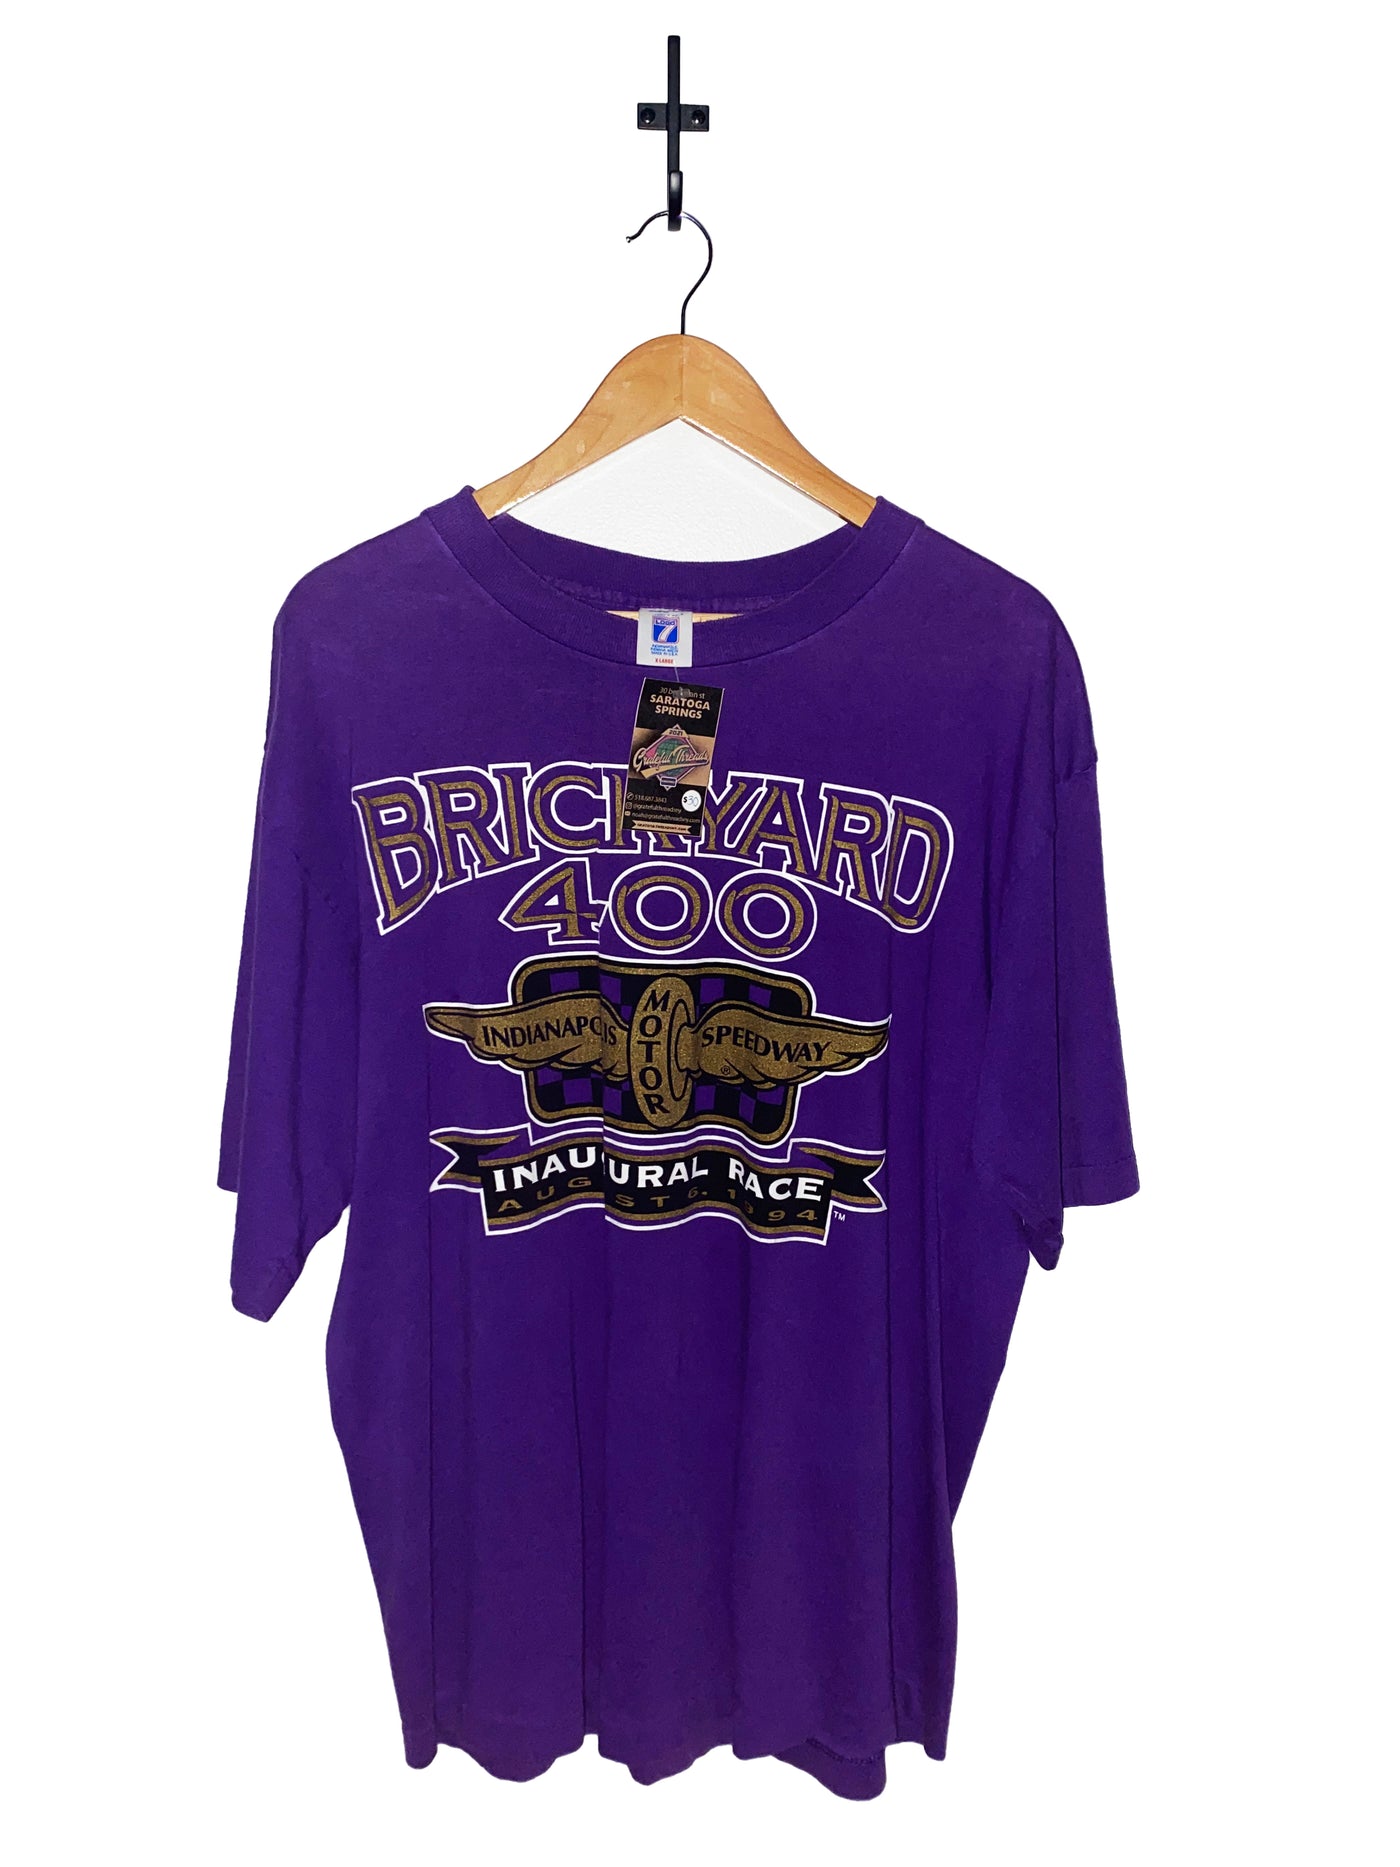 Vintage 1994 Brickyard 400 T-Shirt